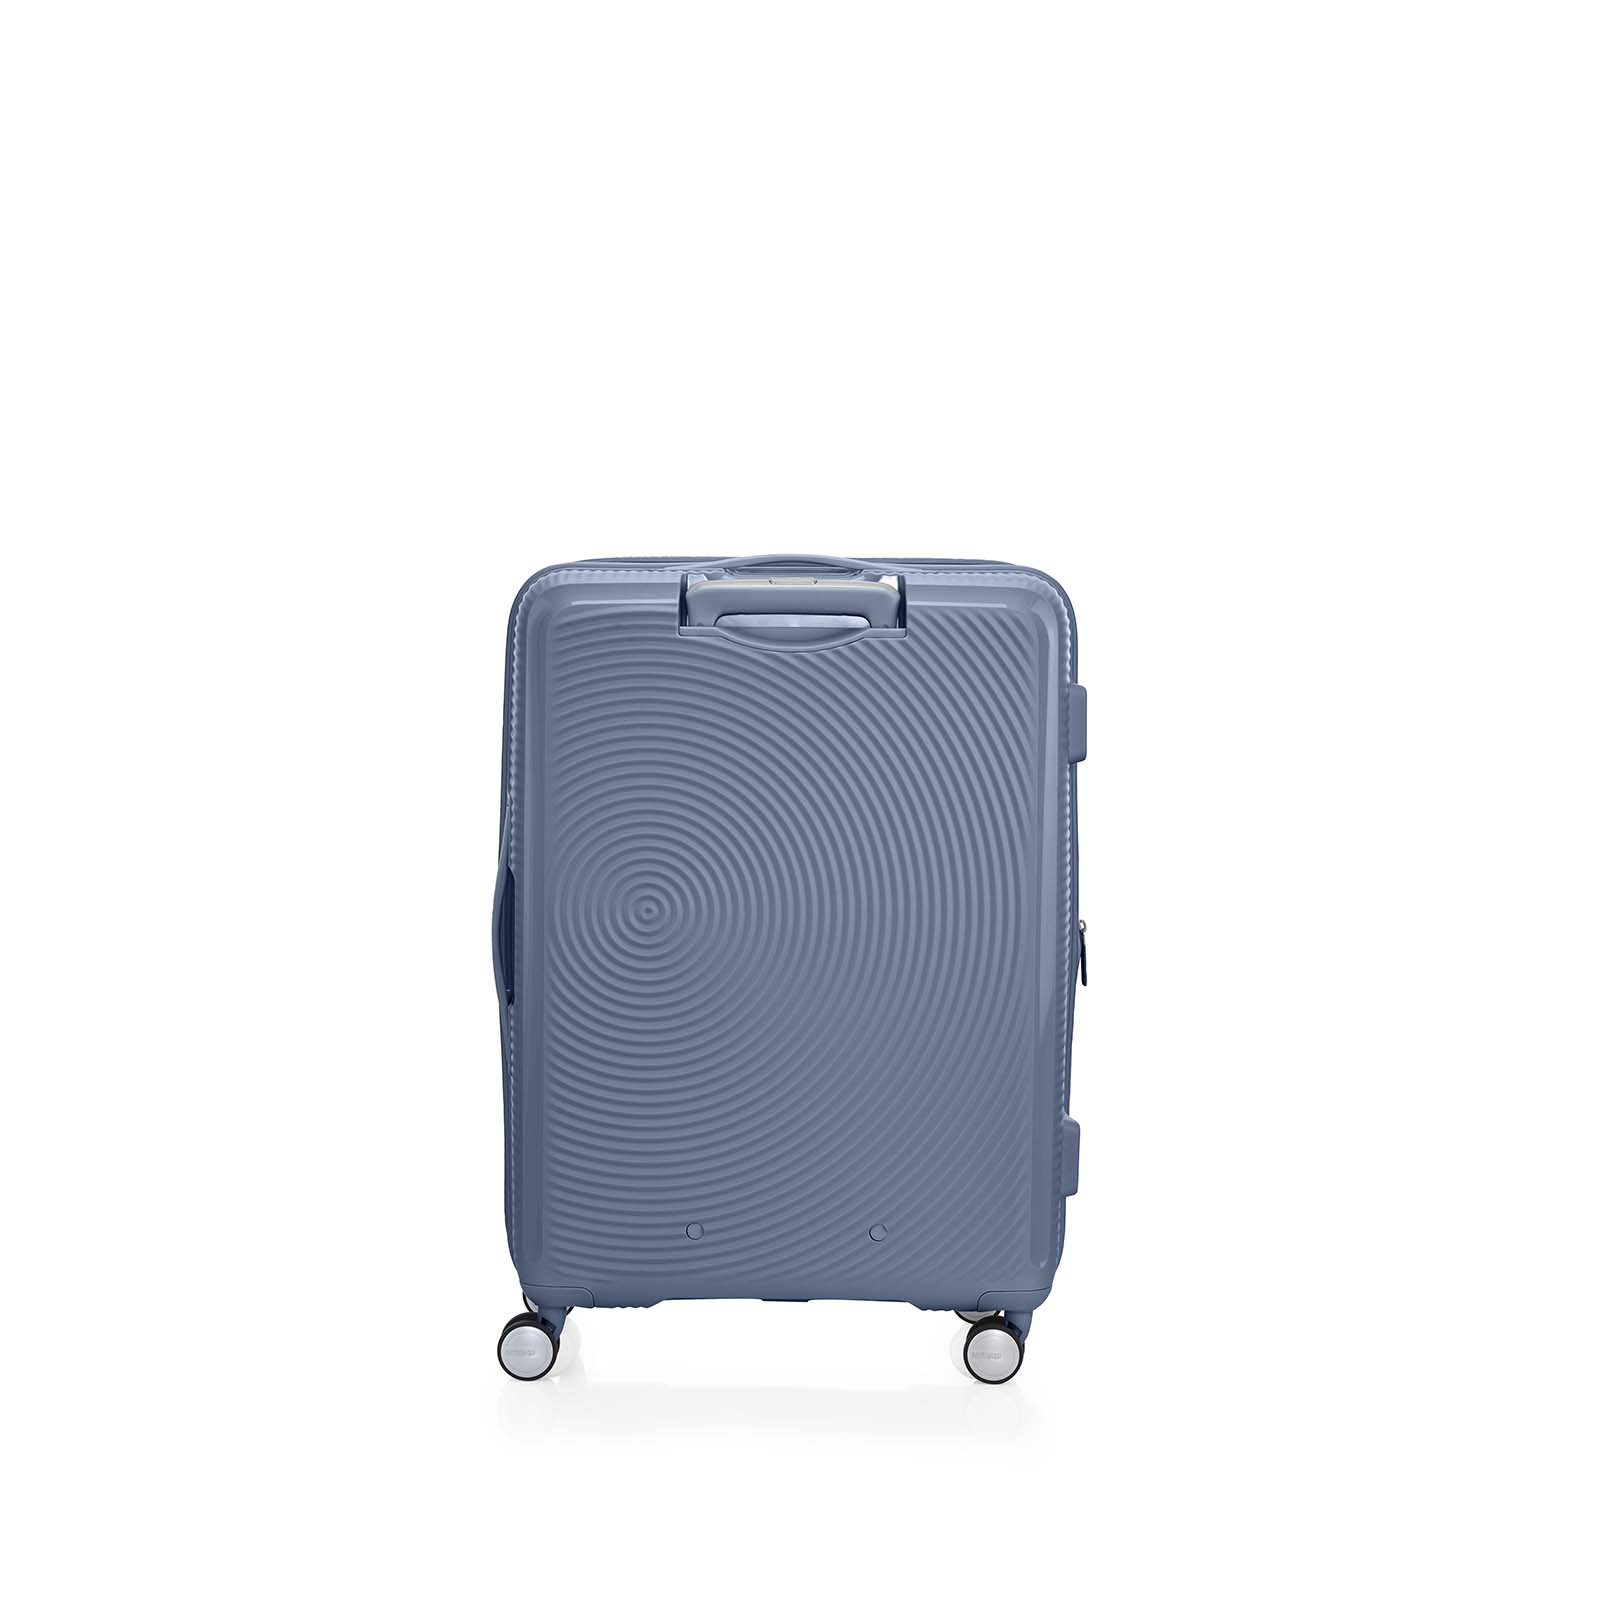 American-Tourister-Curio-2-69cm-Suitcase-Stone-Blue-Back